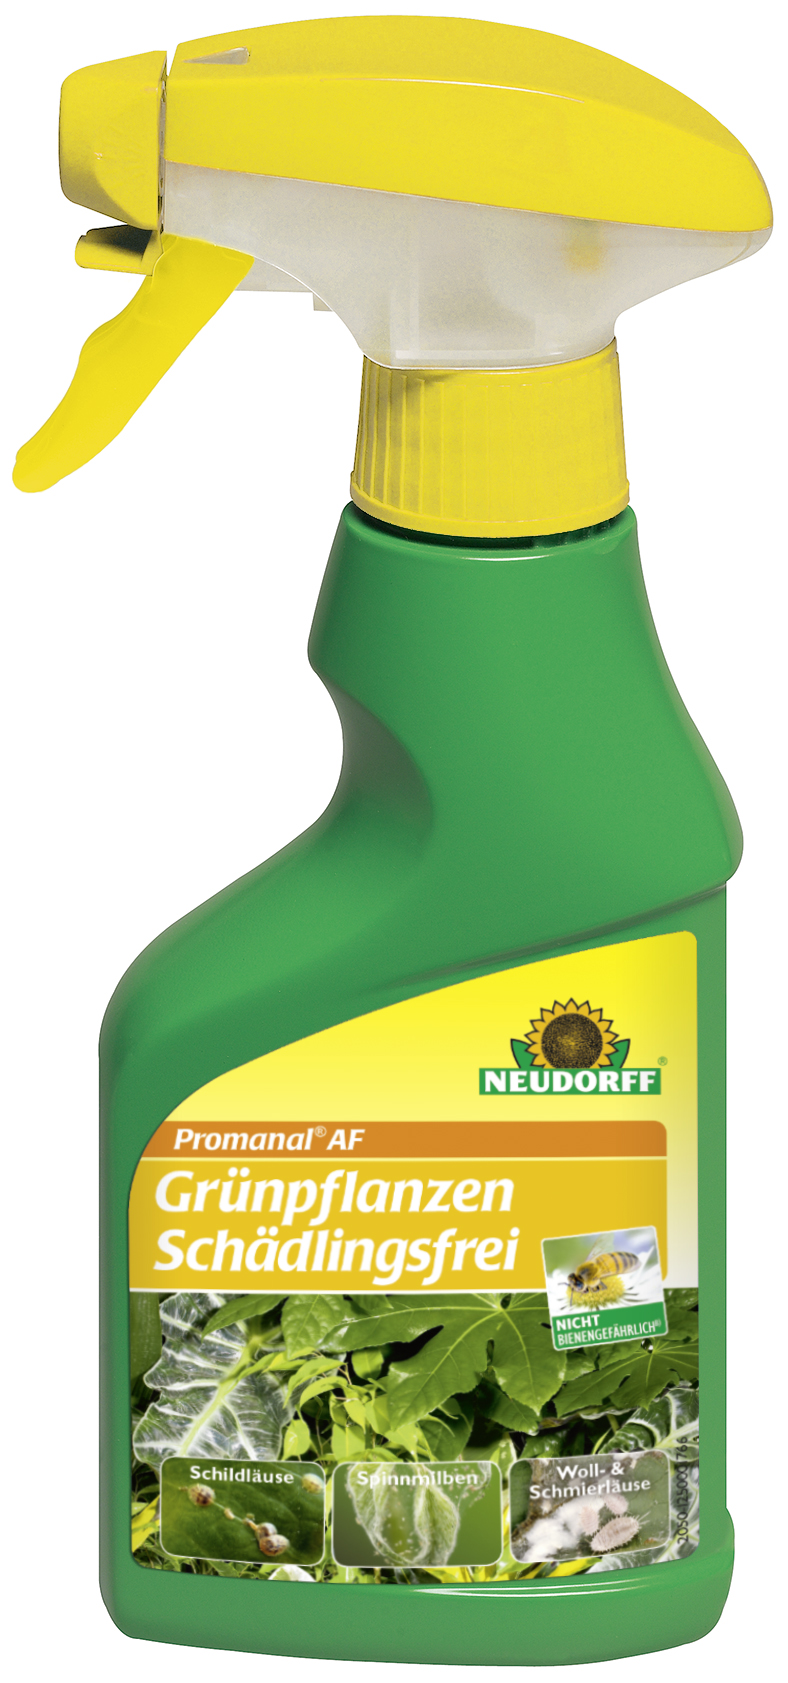 Neudorff Promanal AF Grünpflanzen Schädlingsfrei 250 ml Flasche